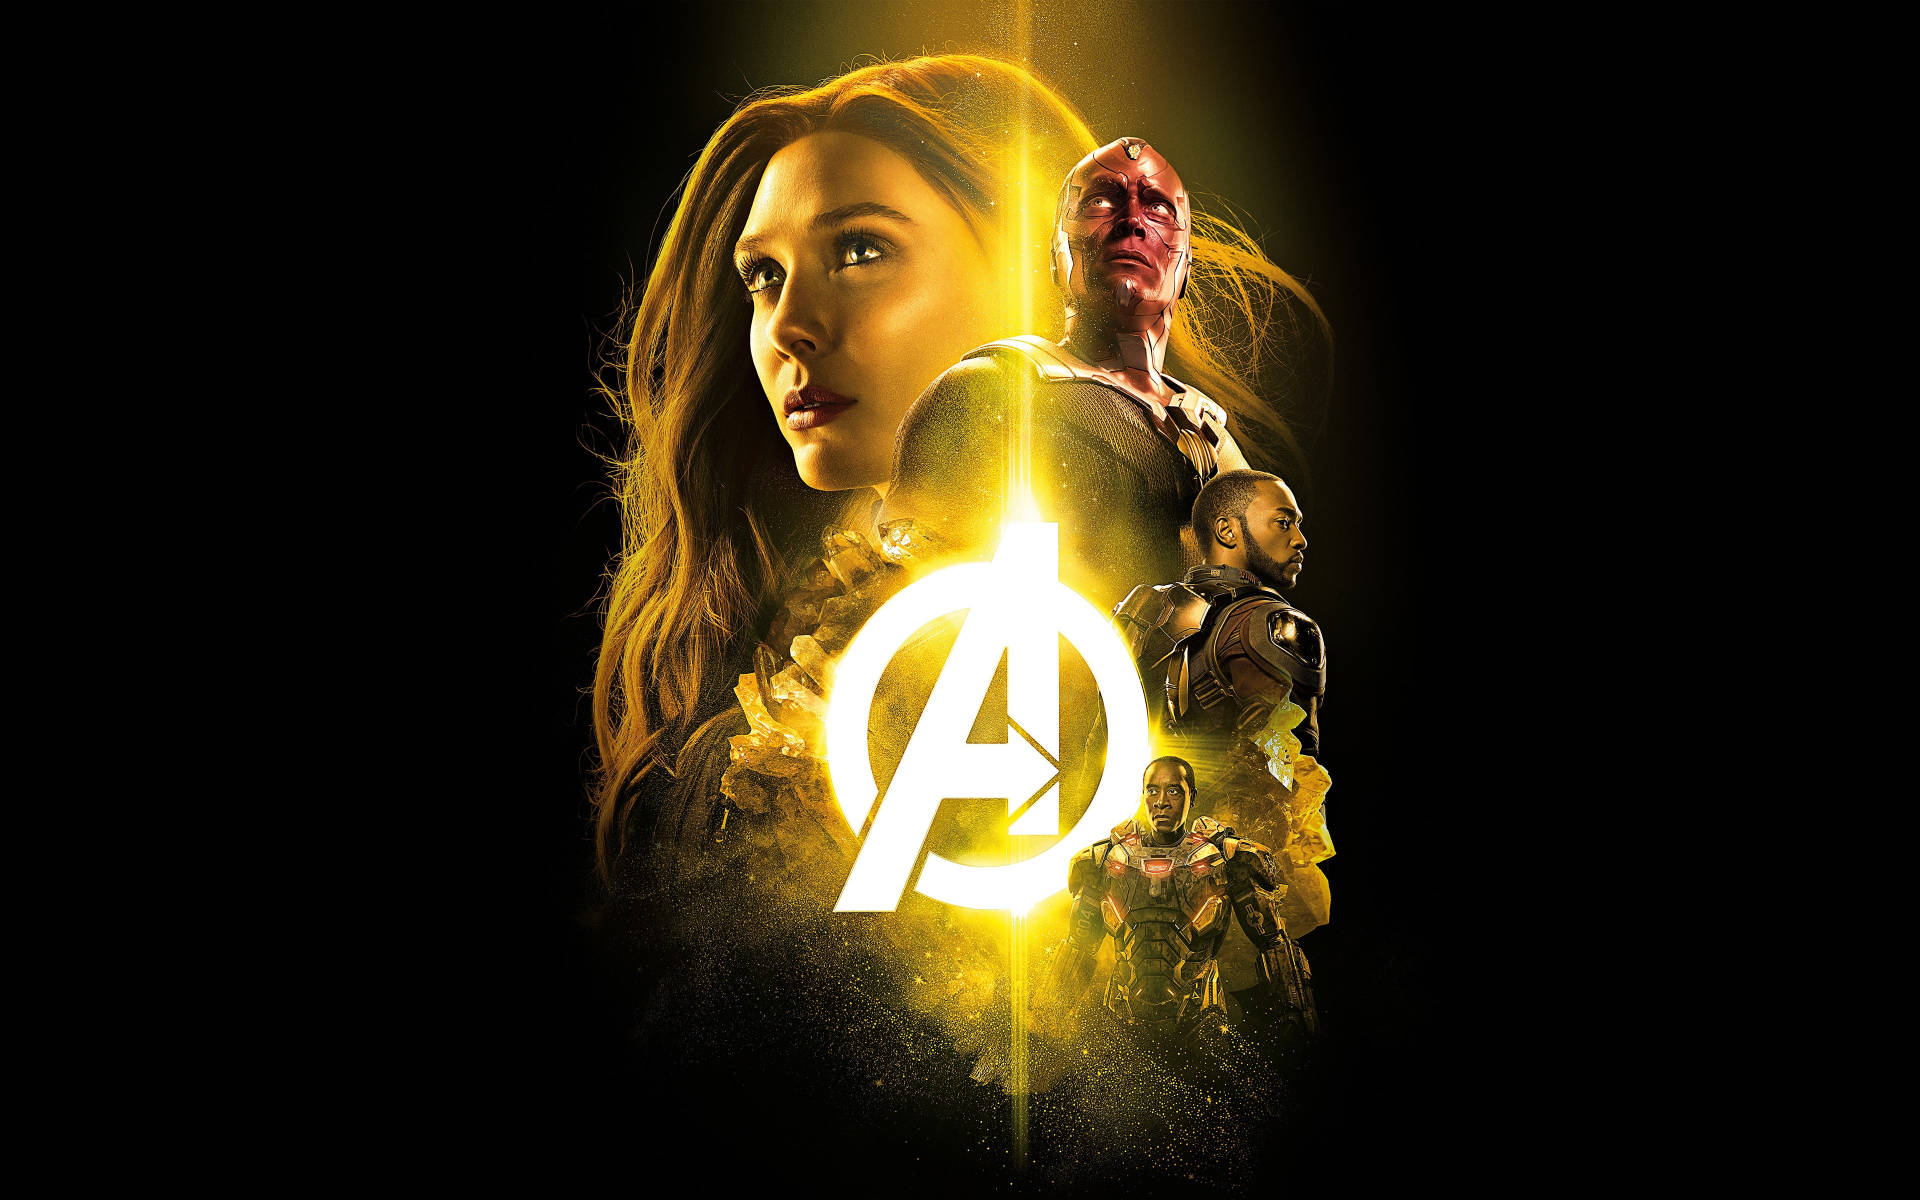 De Avengers Sort og Guld Dække. Wallpaper